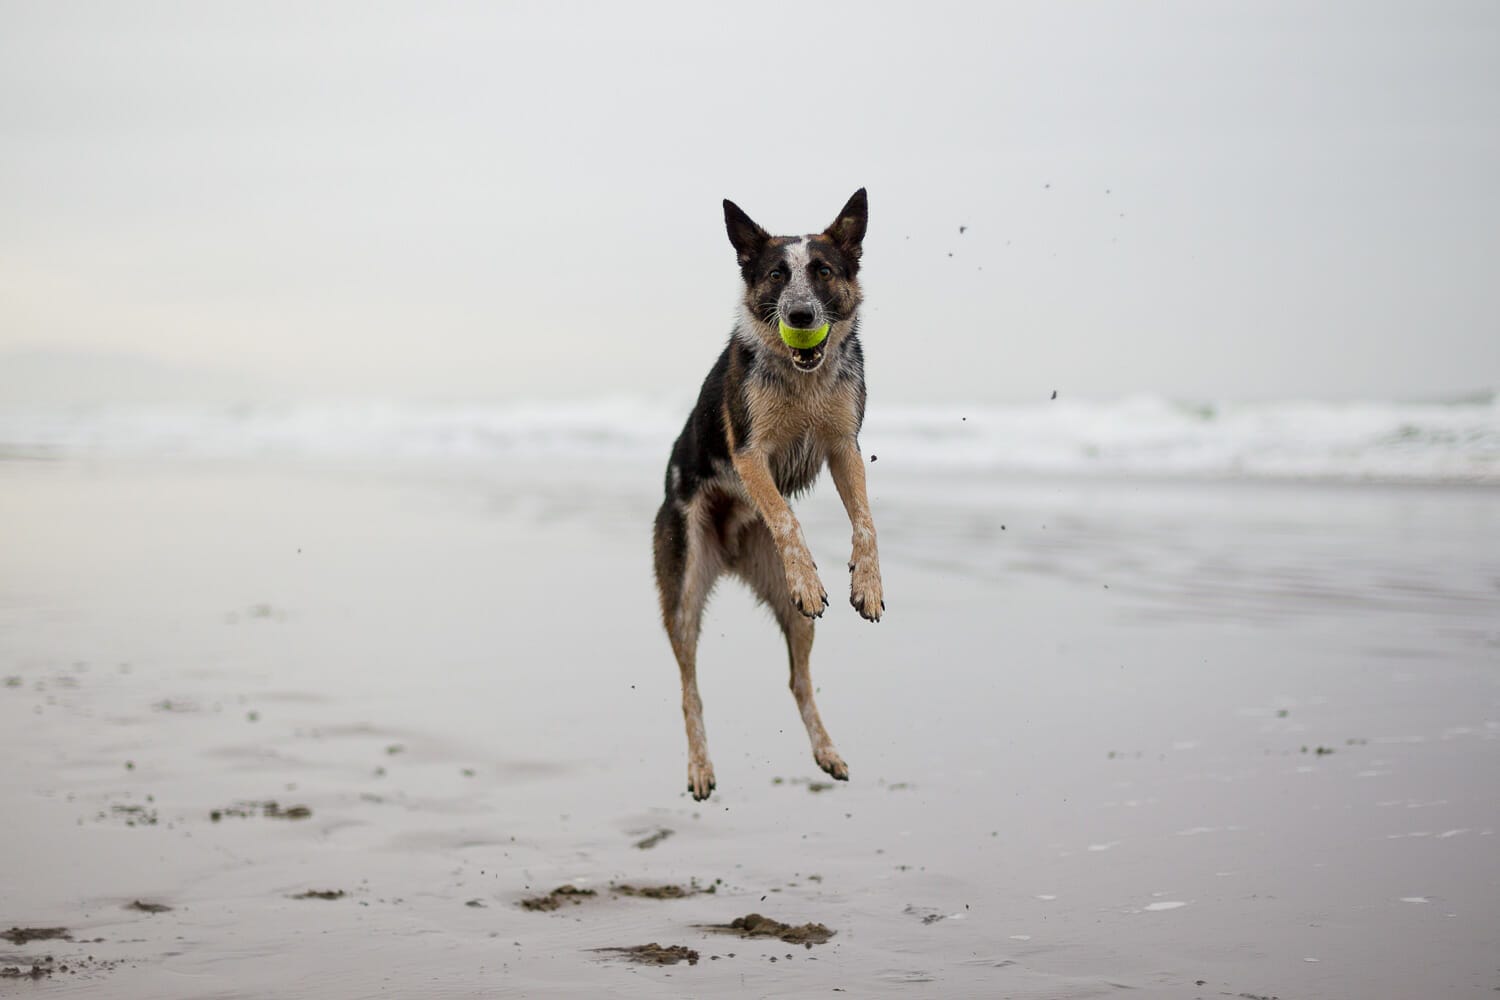 Dog catching a ball on a beach.